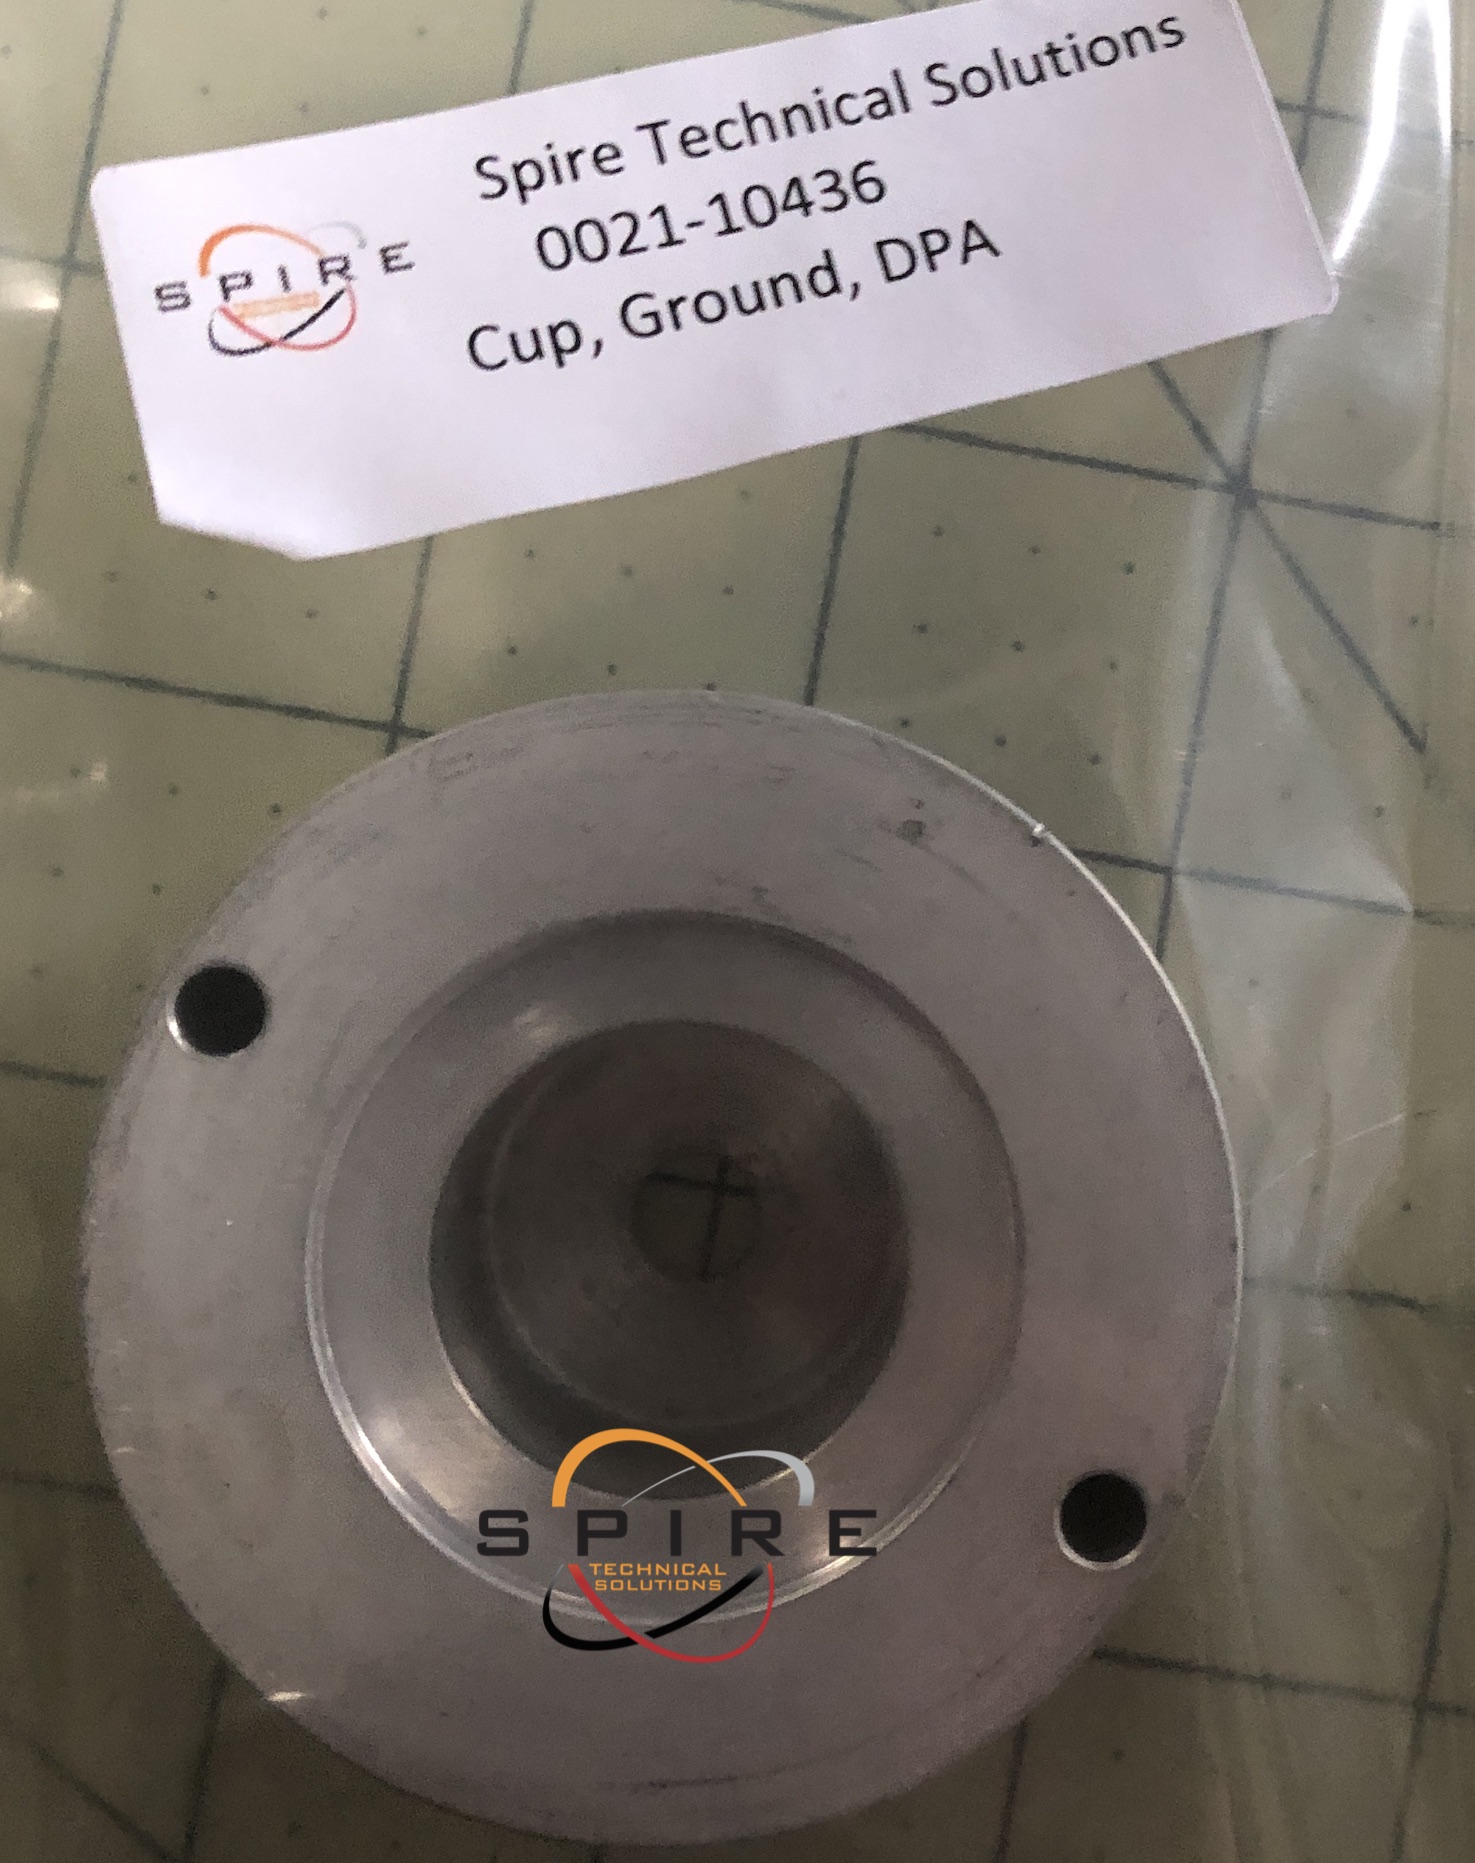 Cup, Ground, DPA